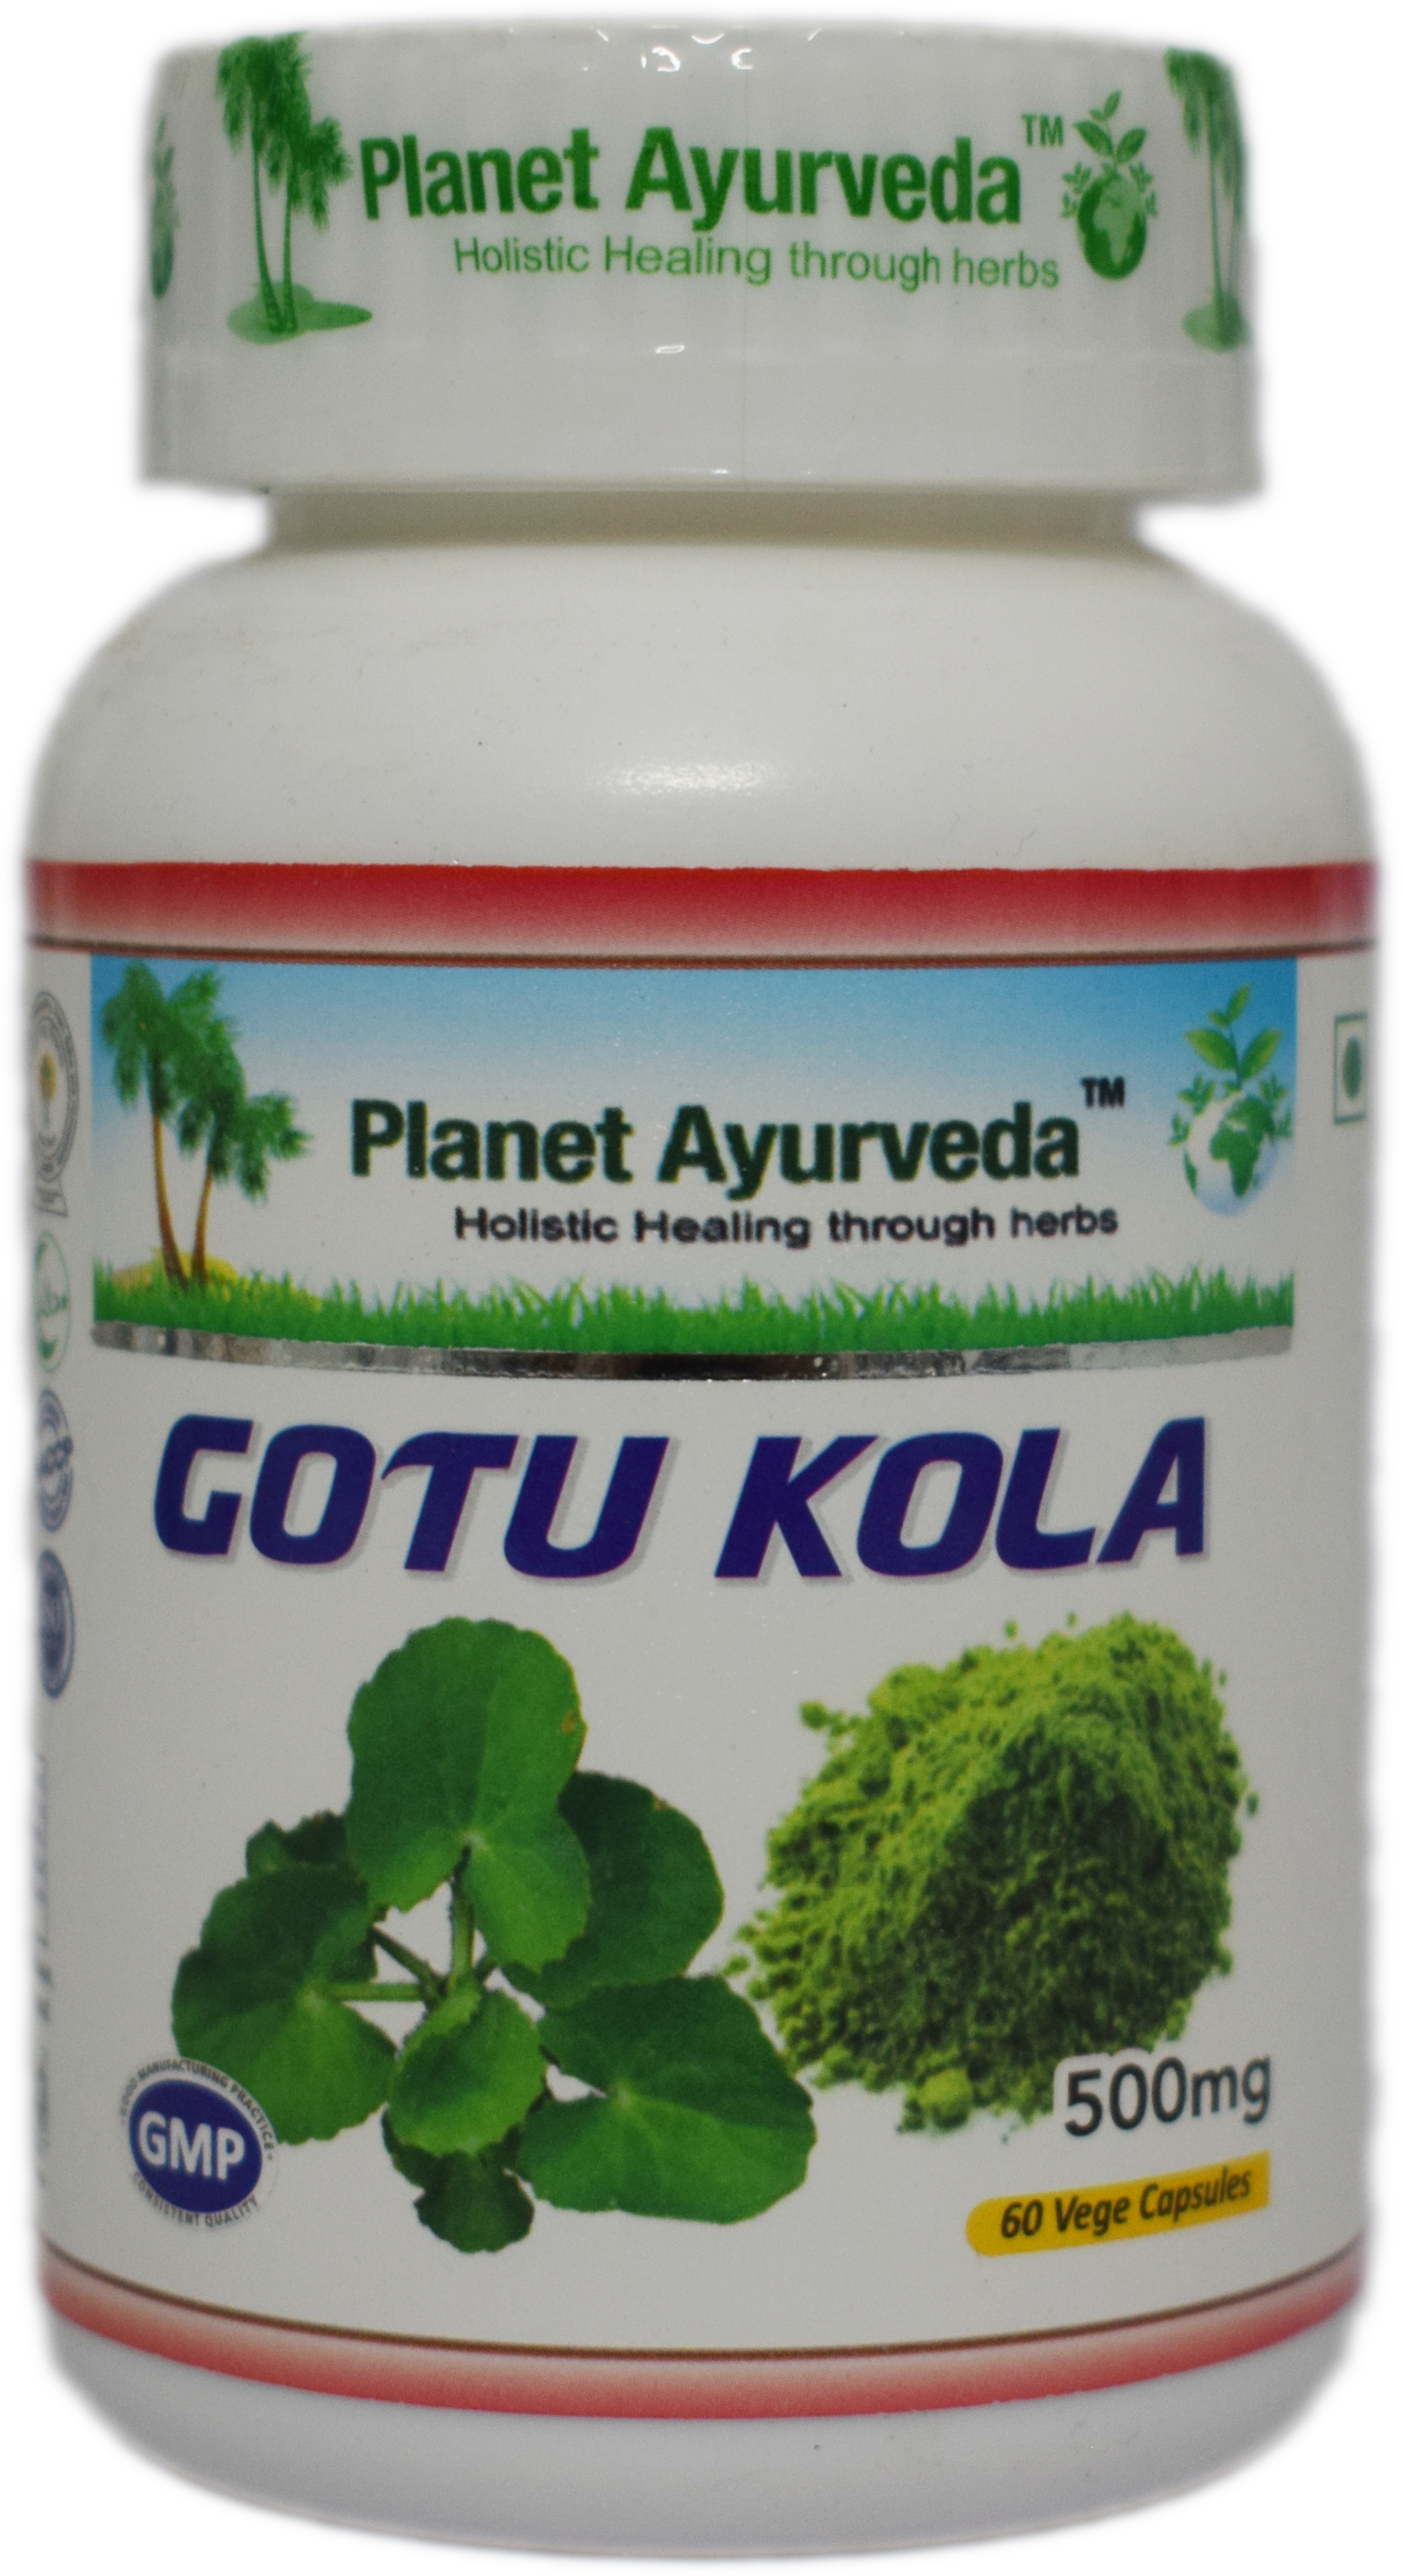 Buy Planet Ayurveda Gotu Kola Capsules at Best Price Online